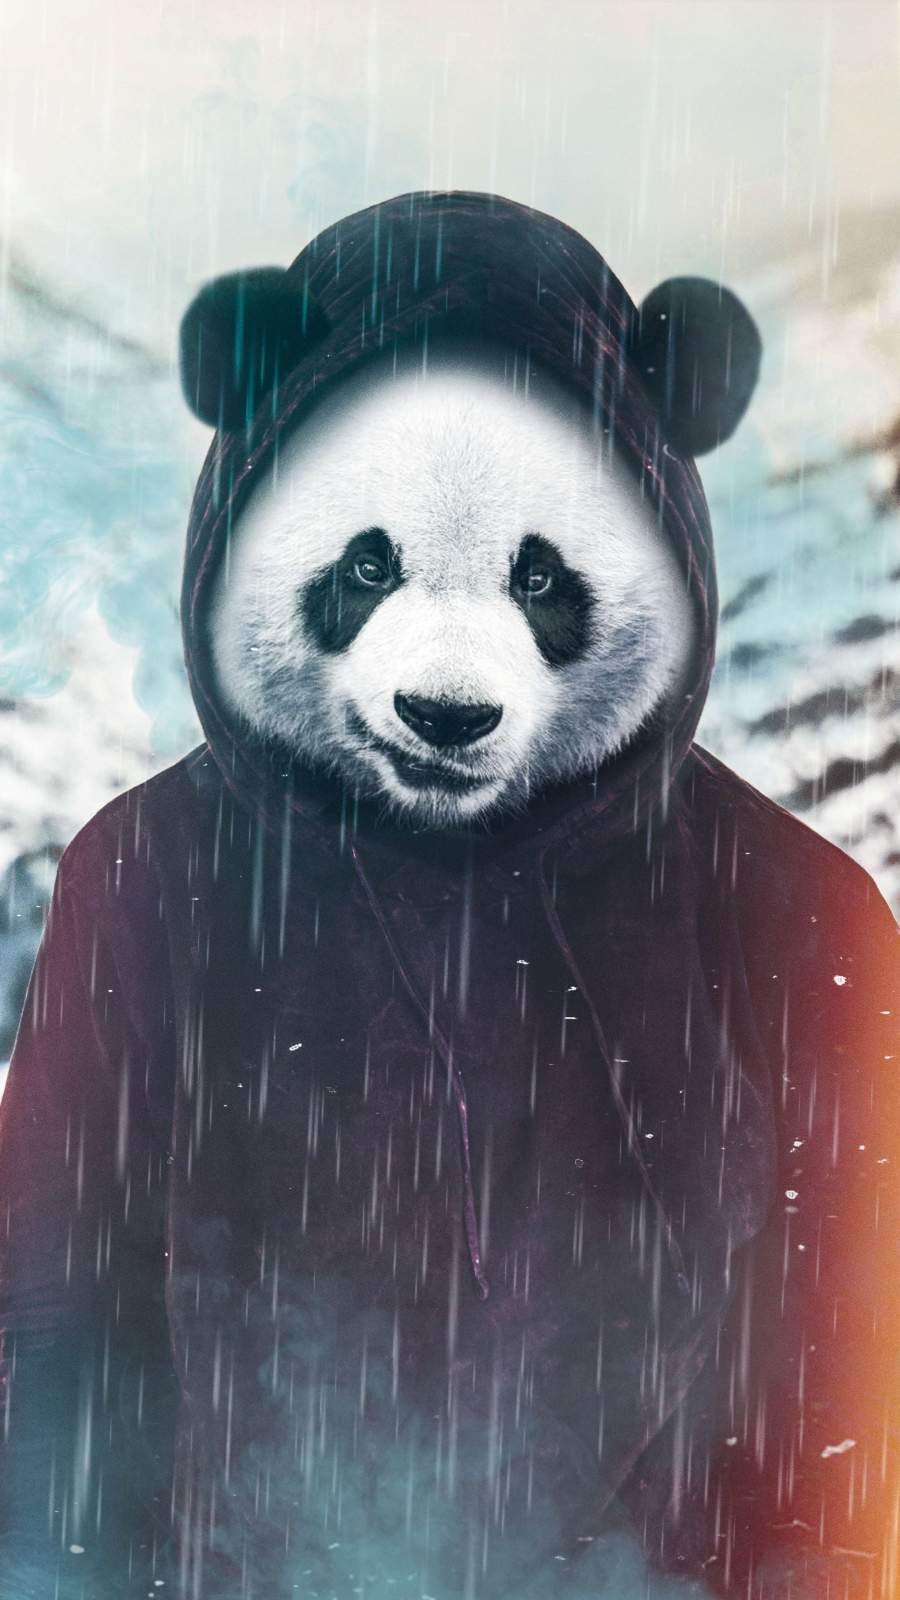 The Panda iPhone Wallpaper. Panda art, Panda wallpaper iphone, Panda background